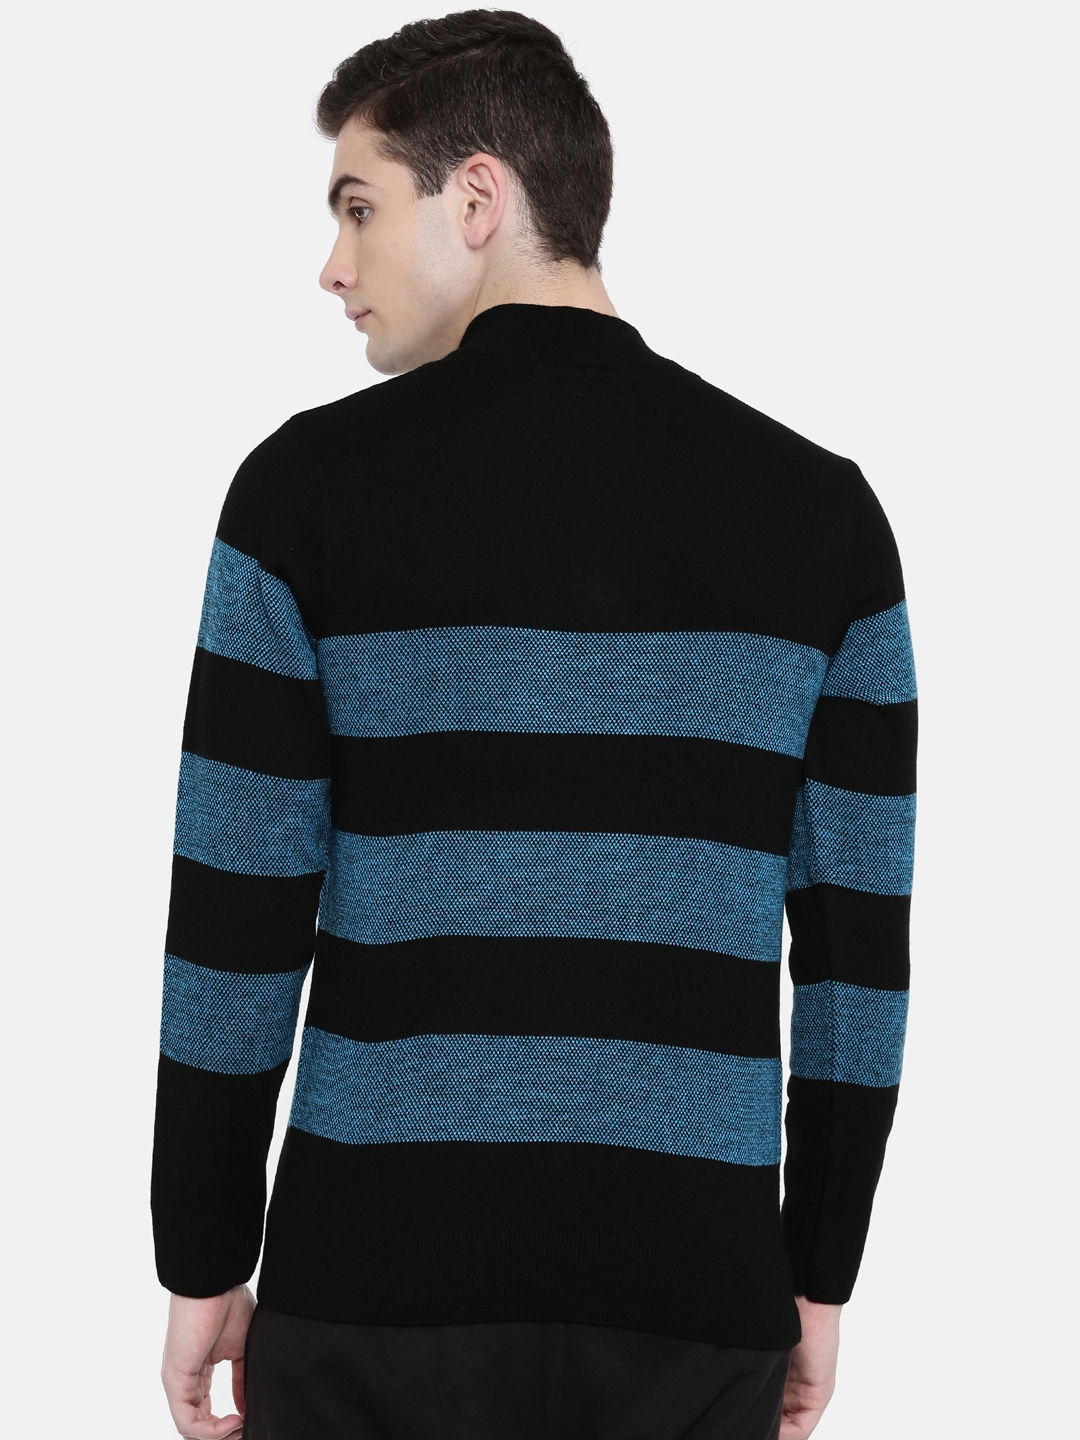 Men's Black Acrylic Melange Sweaters